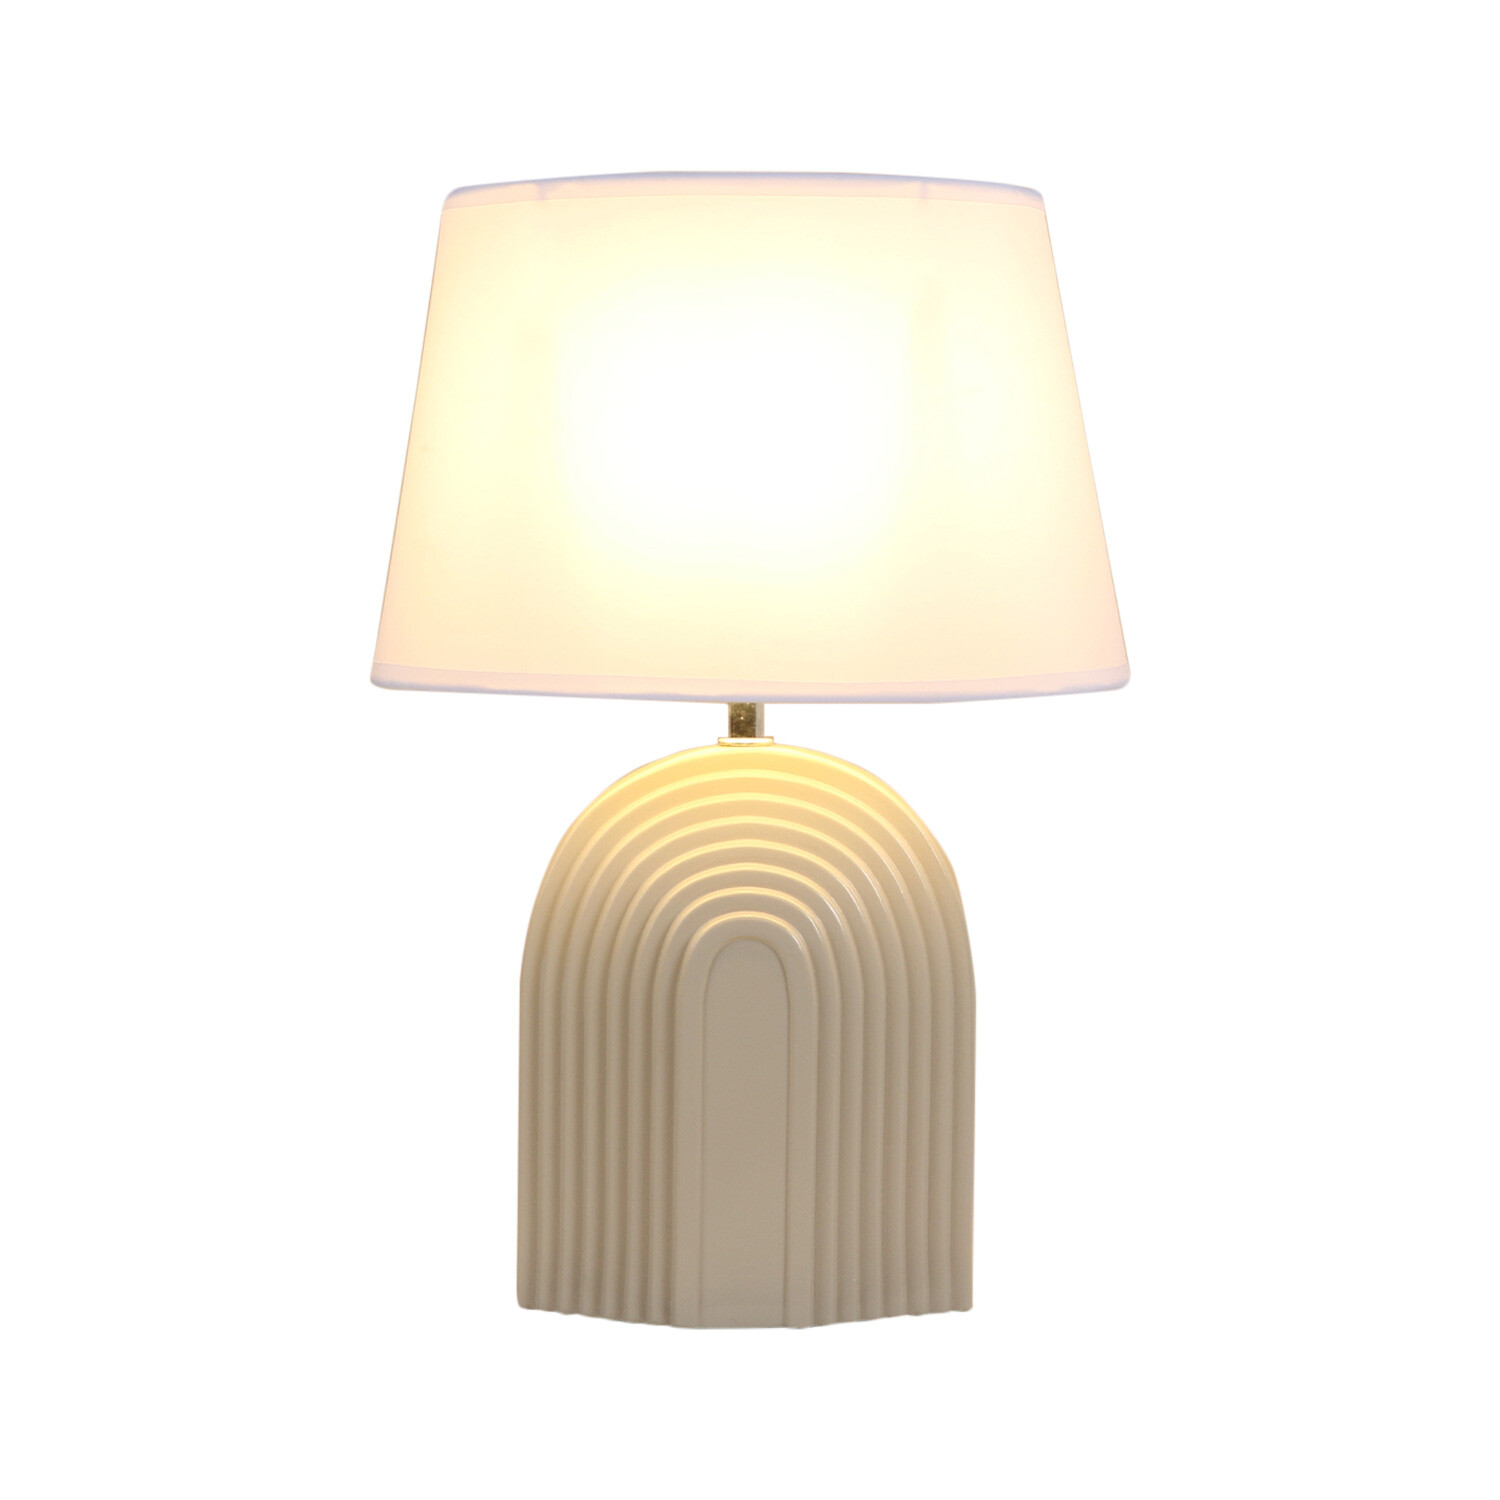 Ezra Arch Table Lamp Image 2